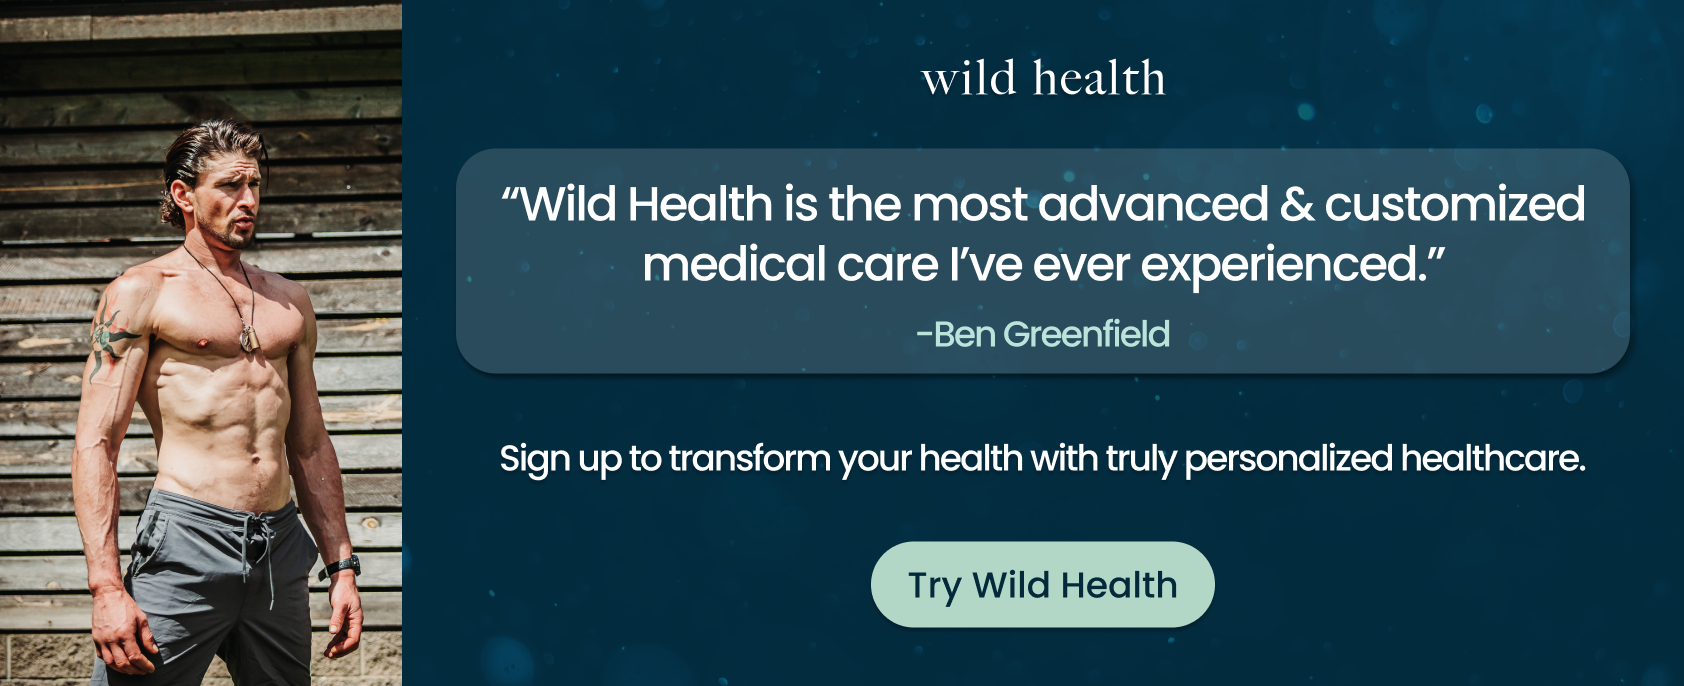 Wild Health Ad